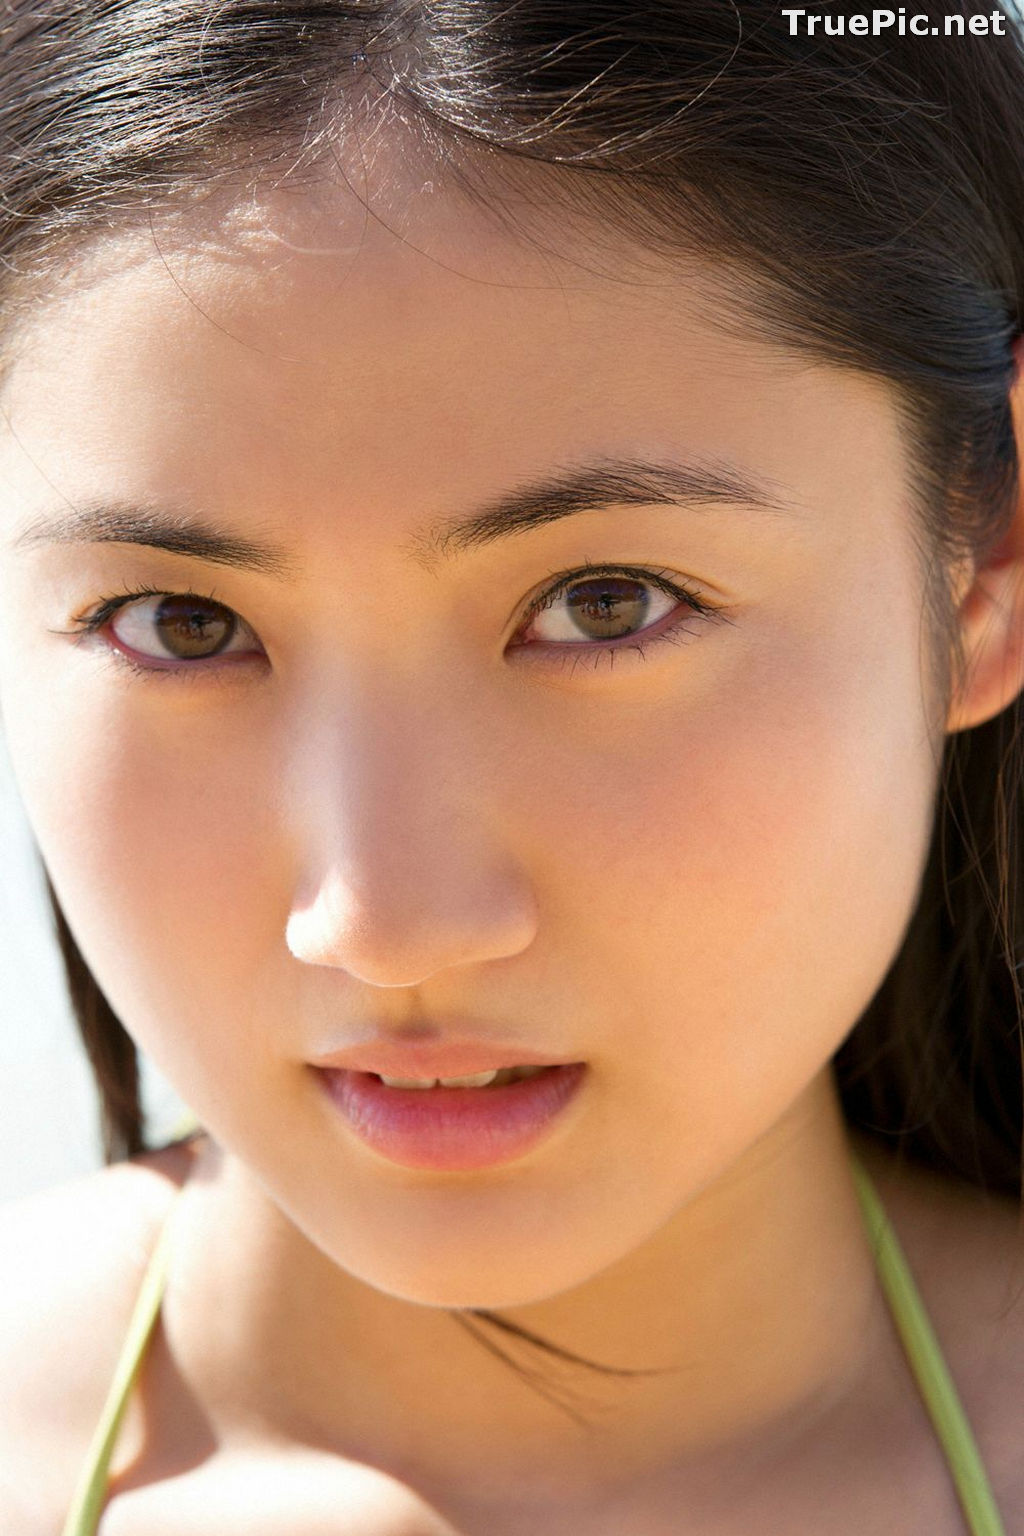 Image [YS Web] Vol.429 - Japanese Actress and Gravure Idol - Irie Saaya - TruePic.net - Picture-92